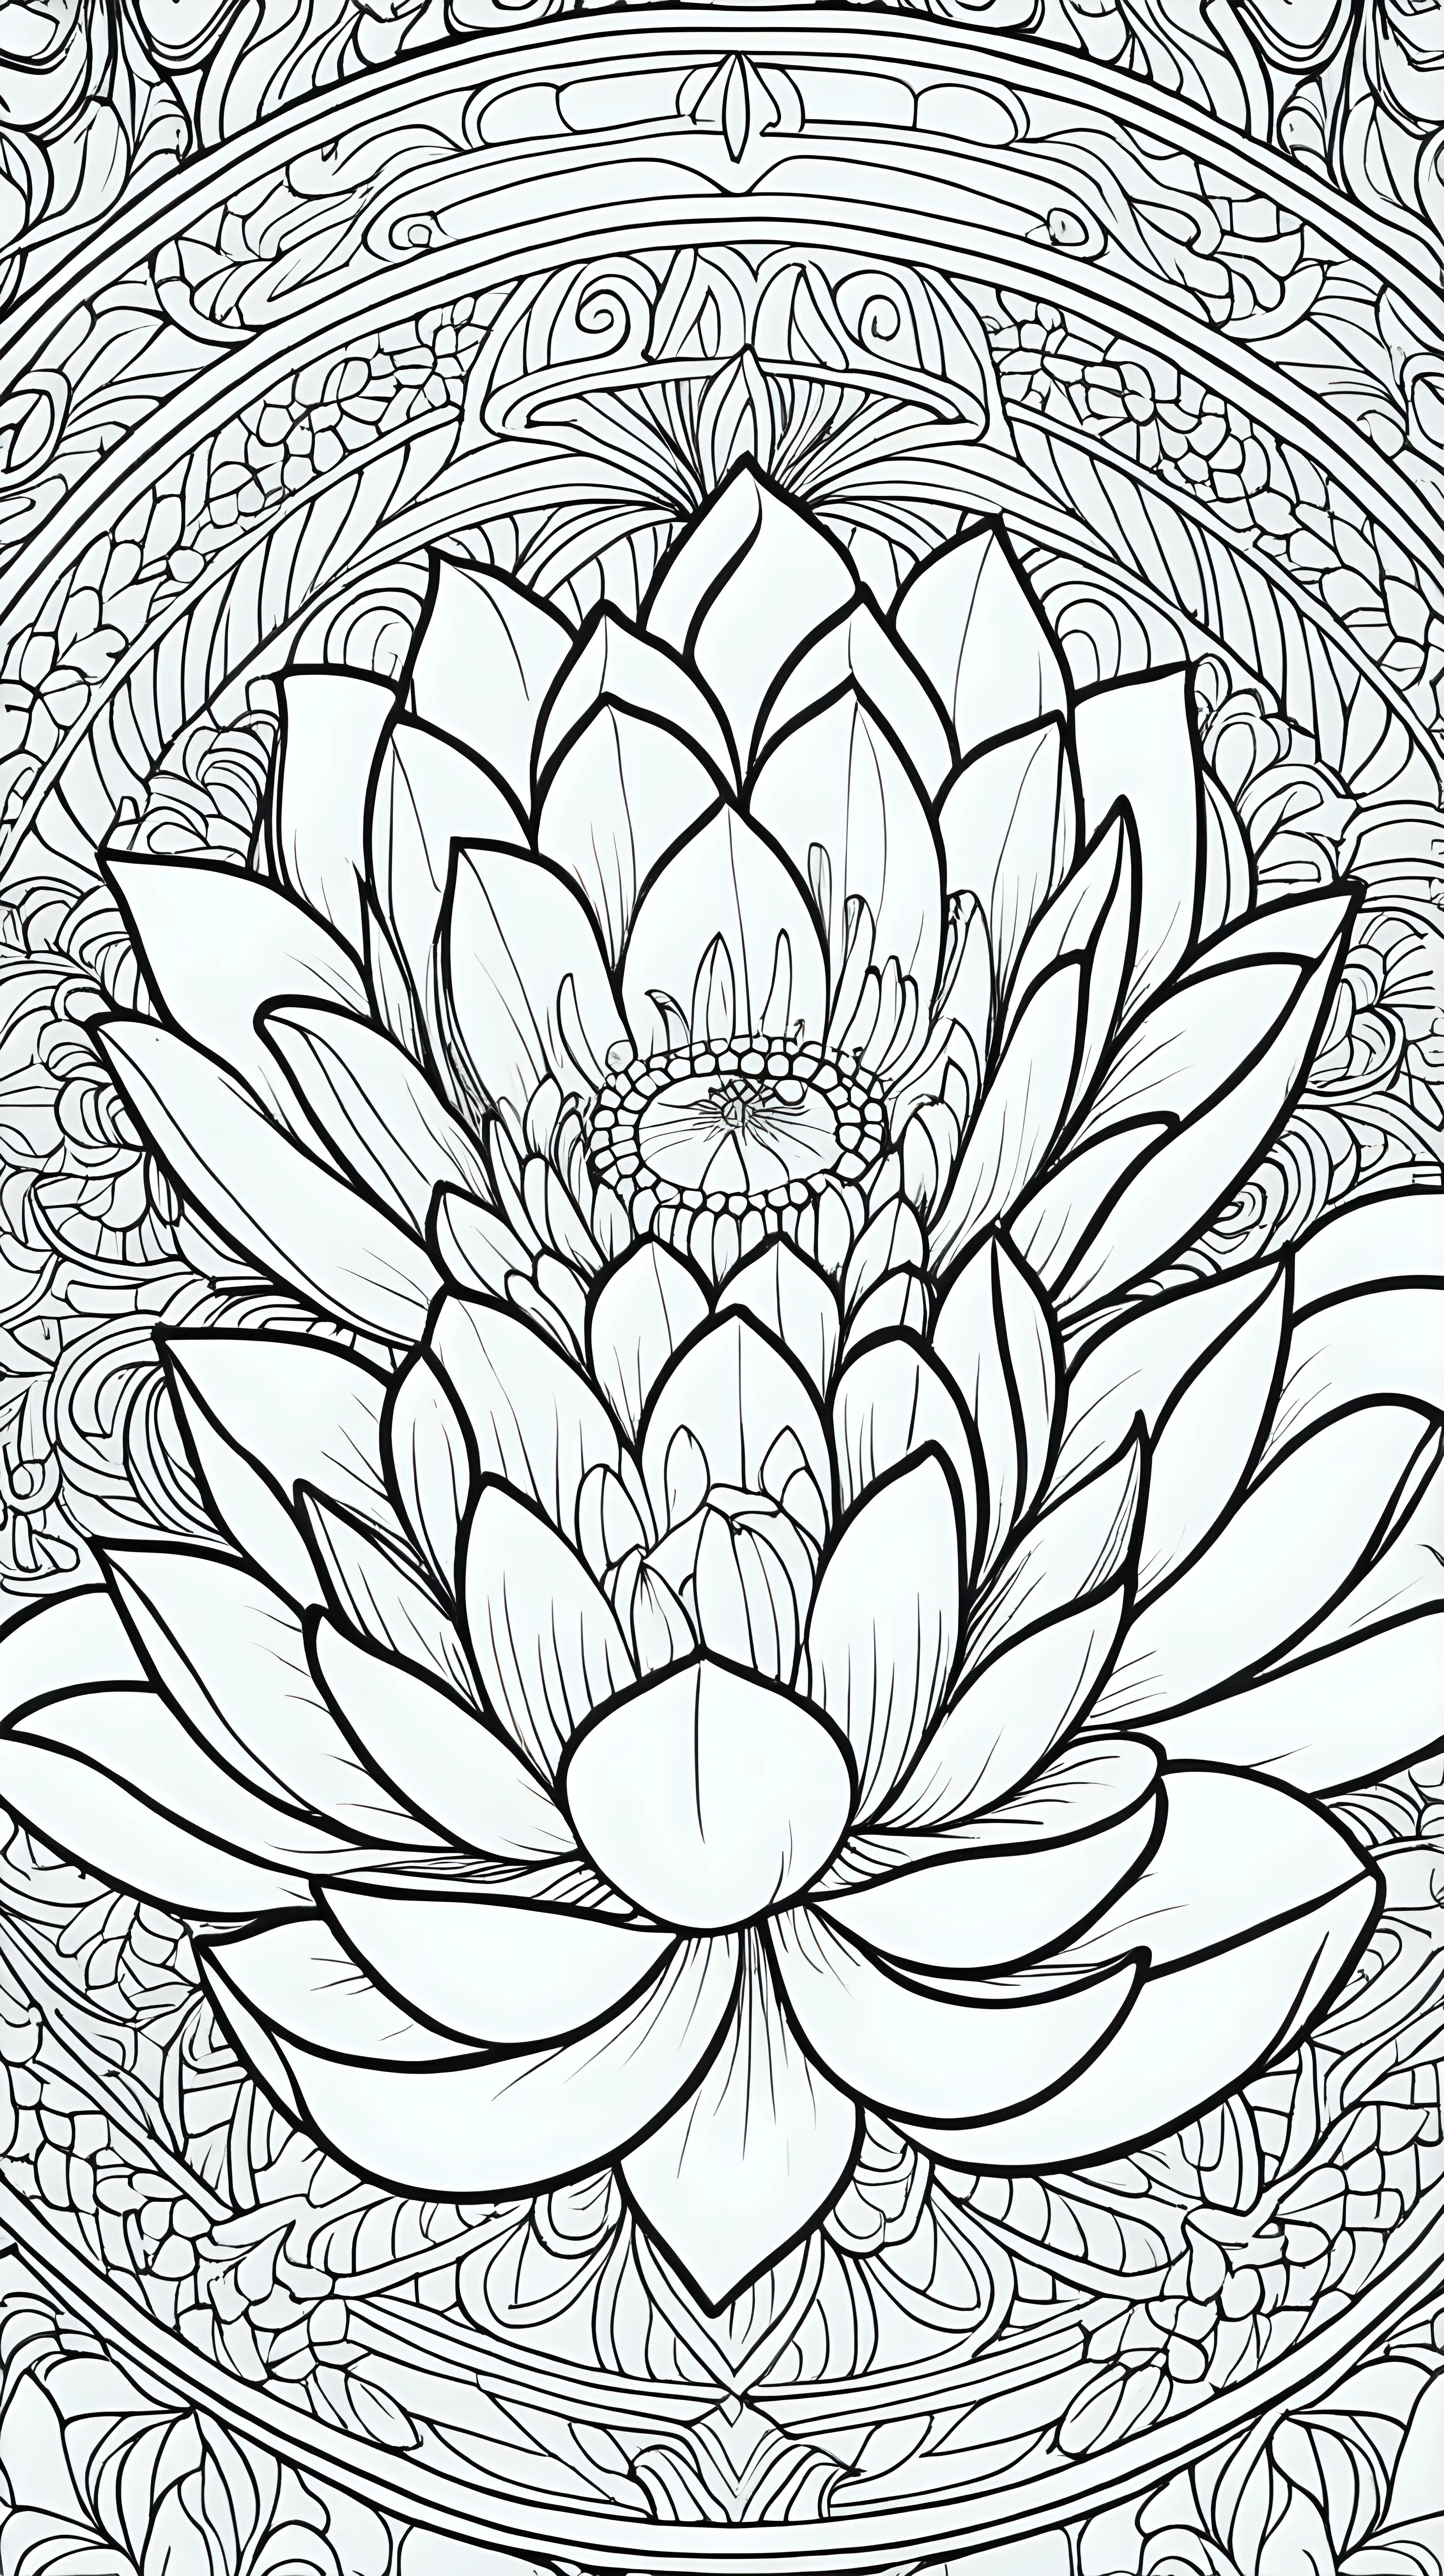 coloring book image, thin black lines, patterned floral mandala pattern, lotus